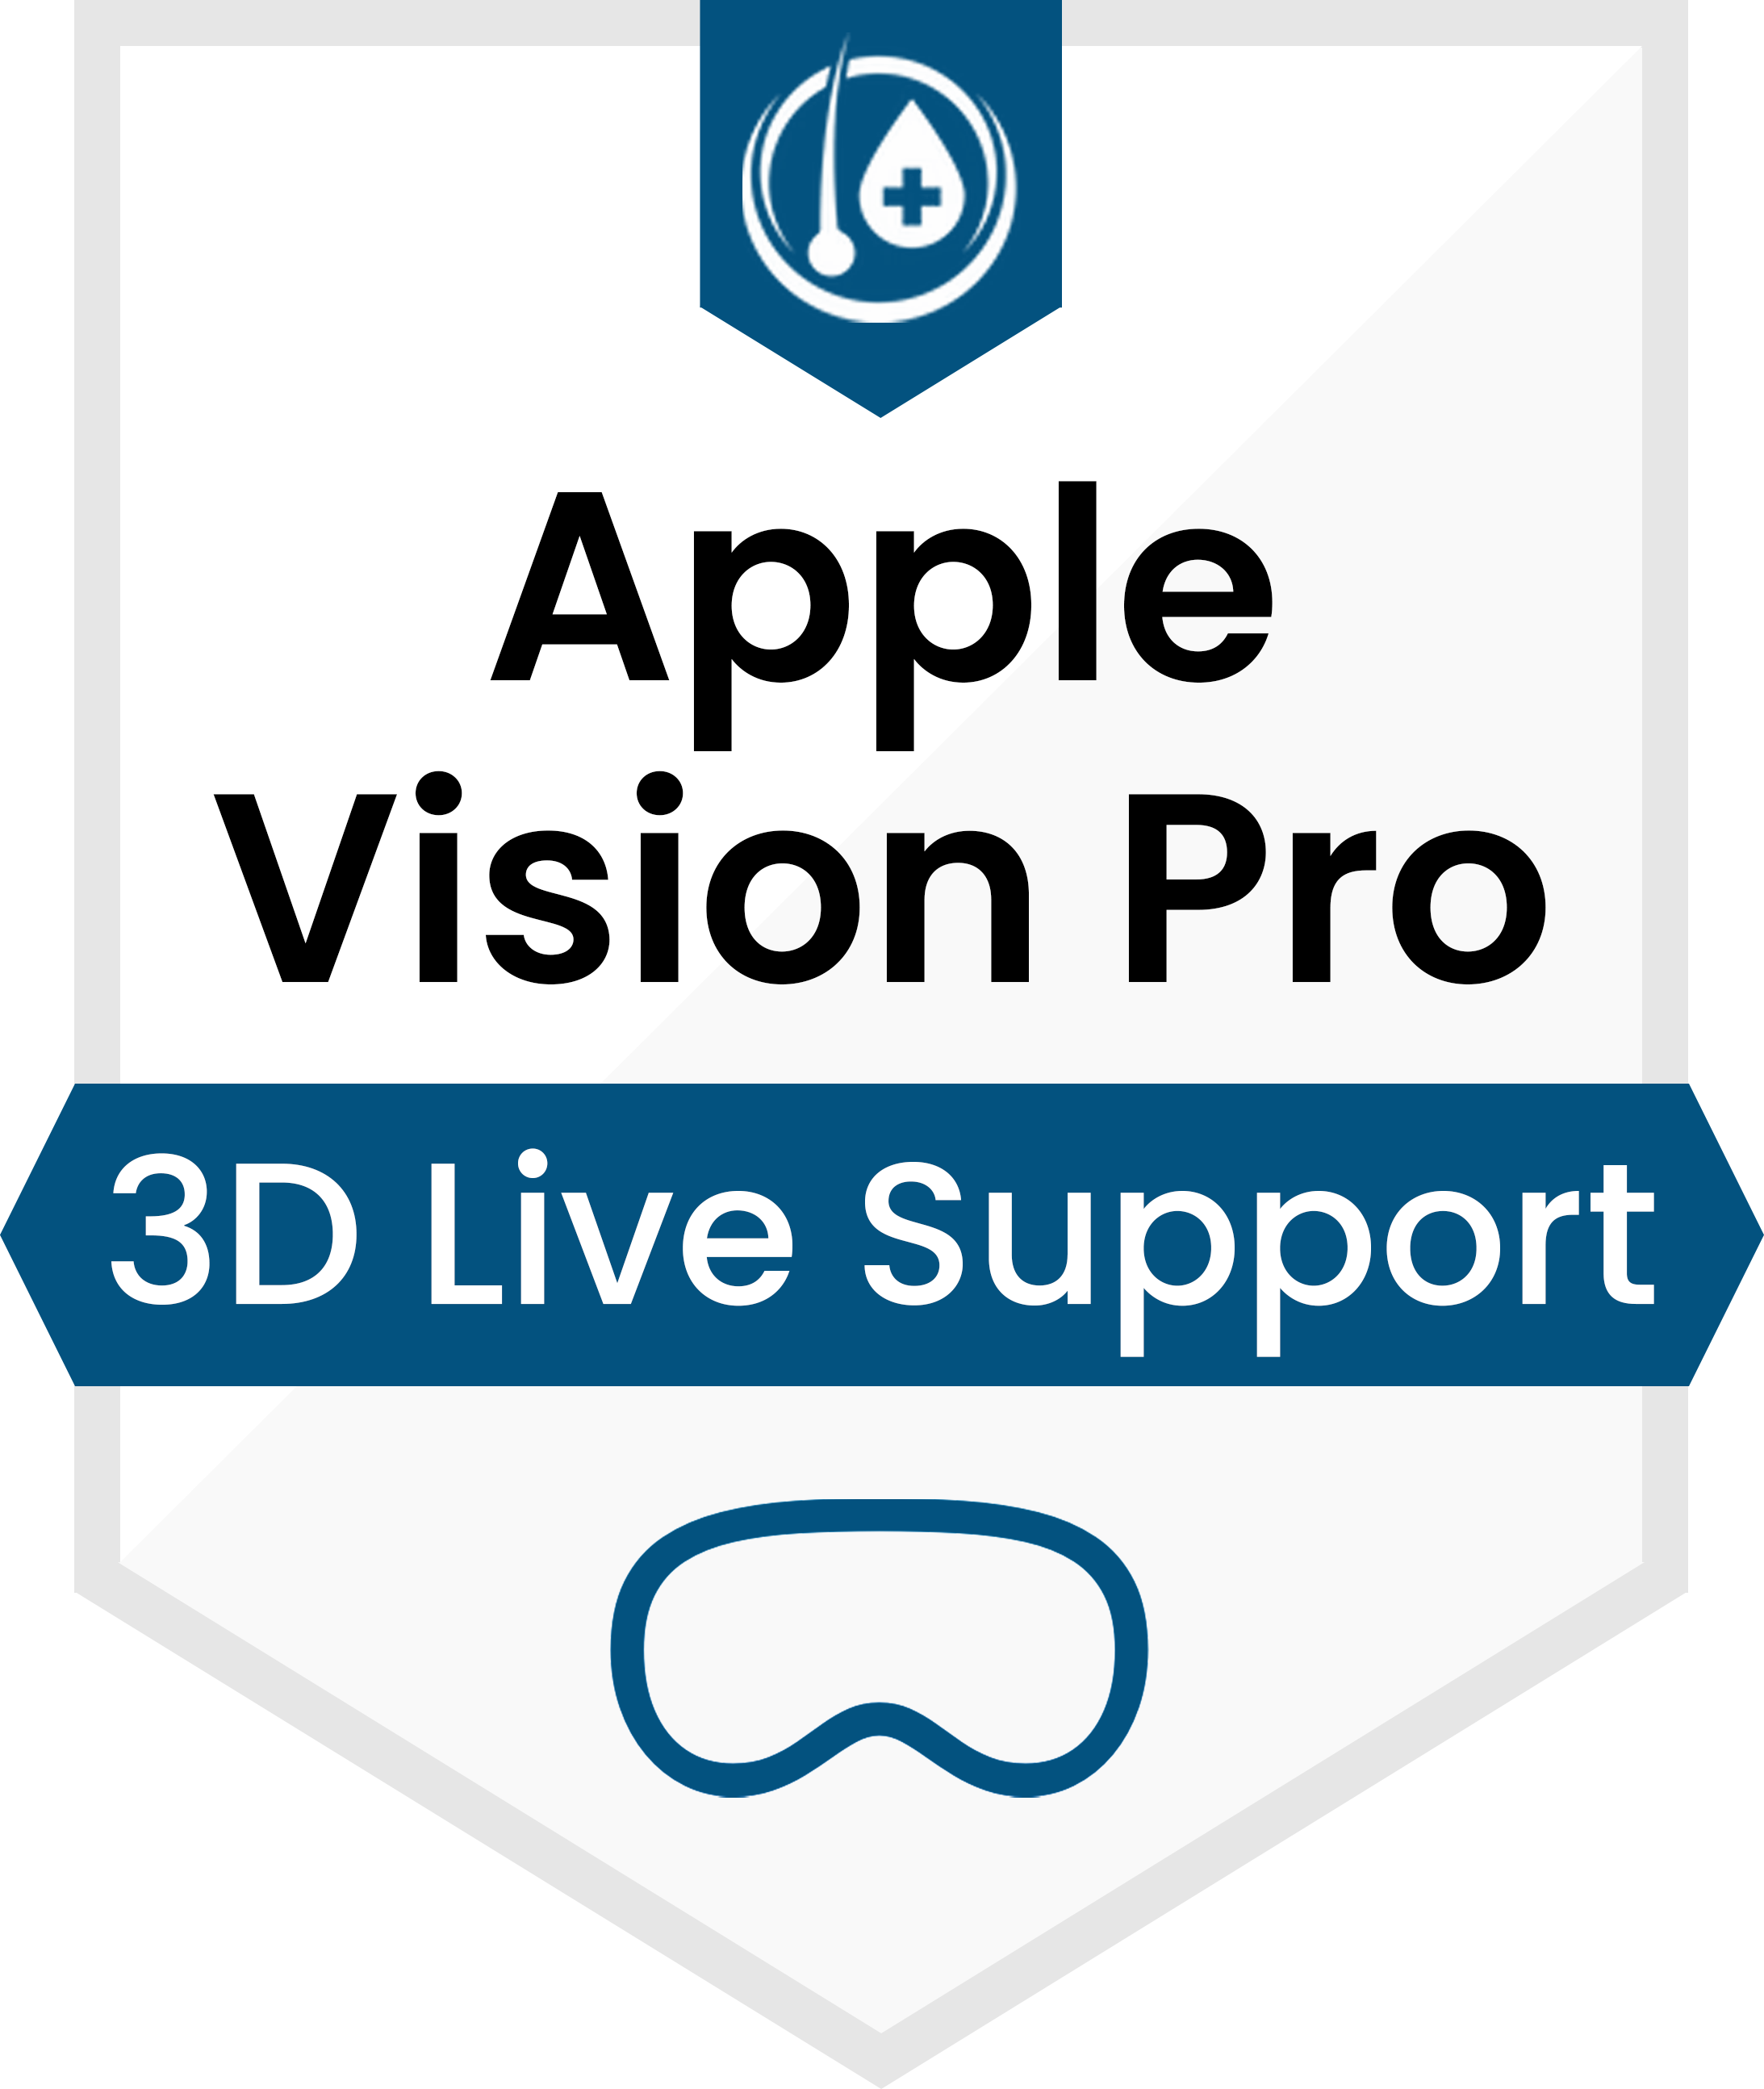 Apple Vision Pro 3D Live Support